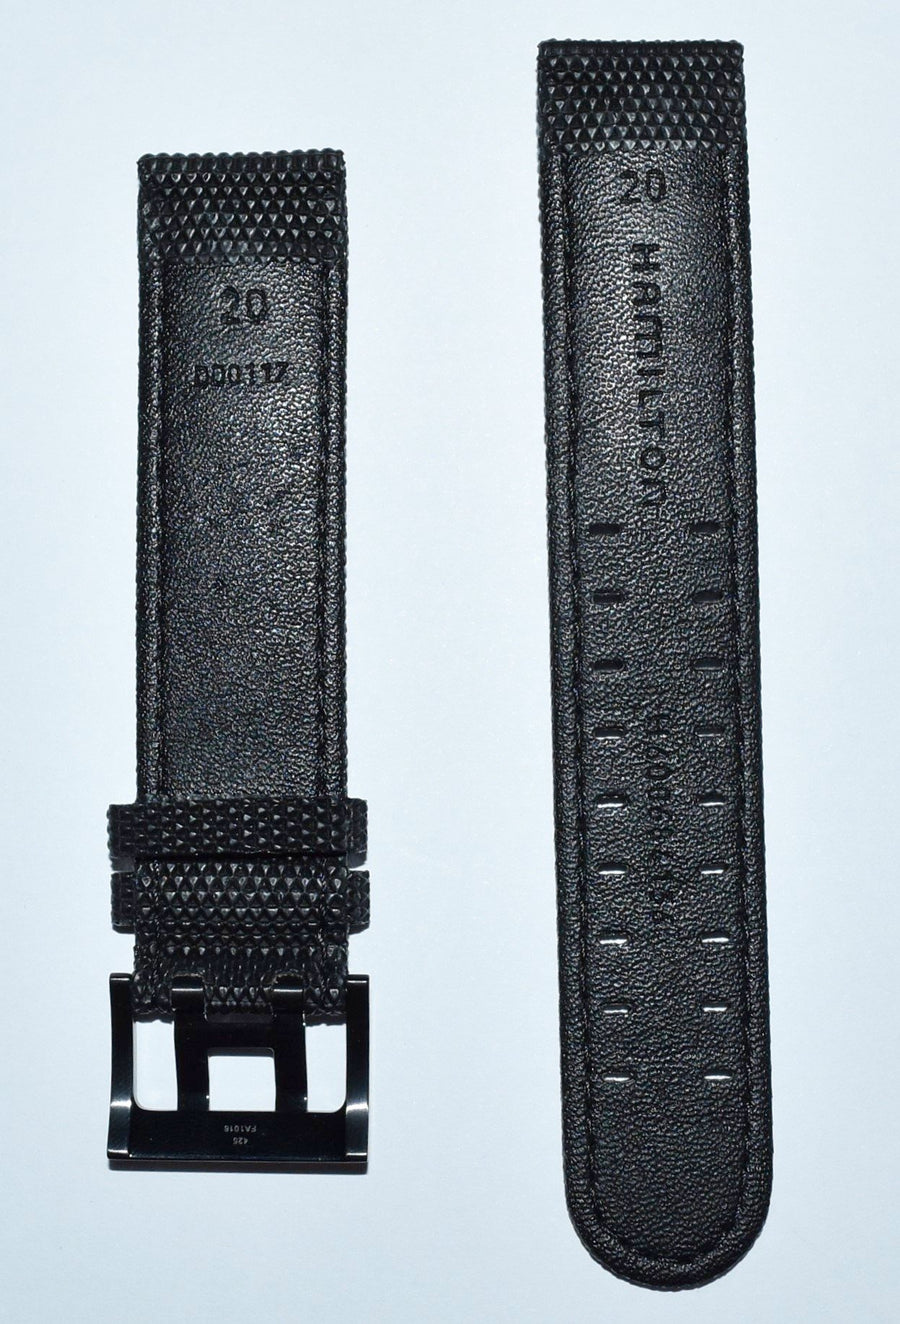 Hamilton Khaki Field 20mm Black Synthetic Watch Band Strap - WATCHBAND EXPERT